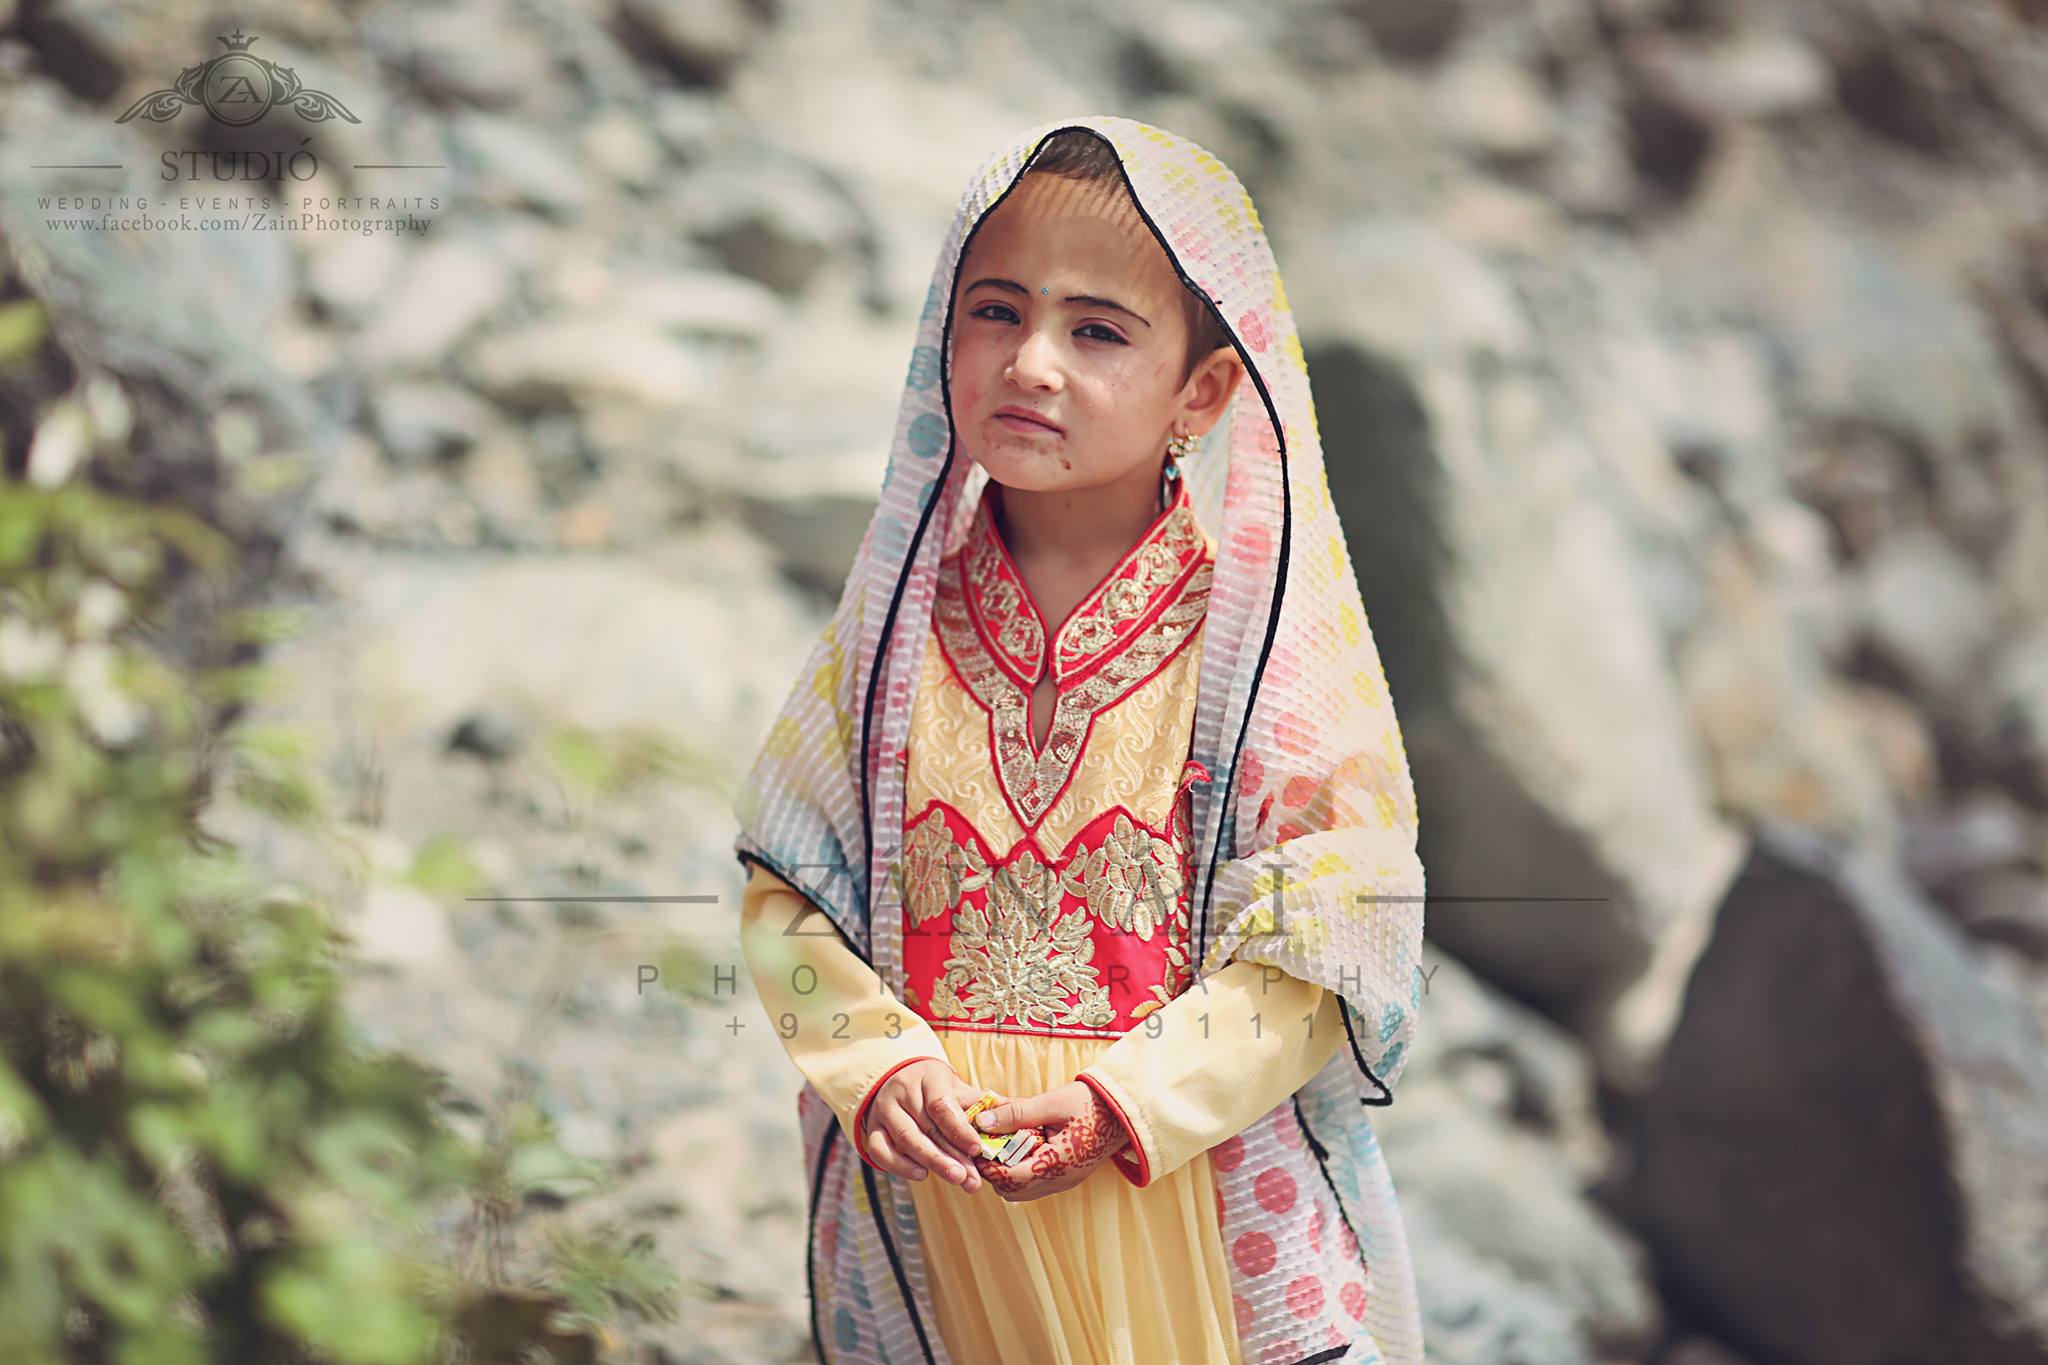 “The children of Hunza Valley, GilgitBalltistan #BeautifulPakistan Credits:...